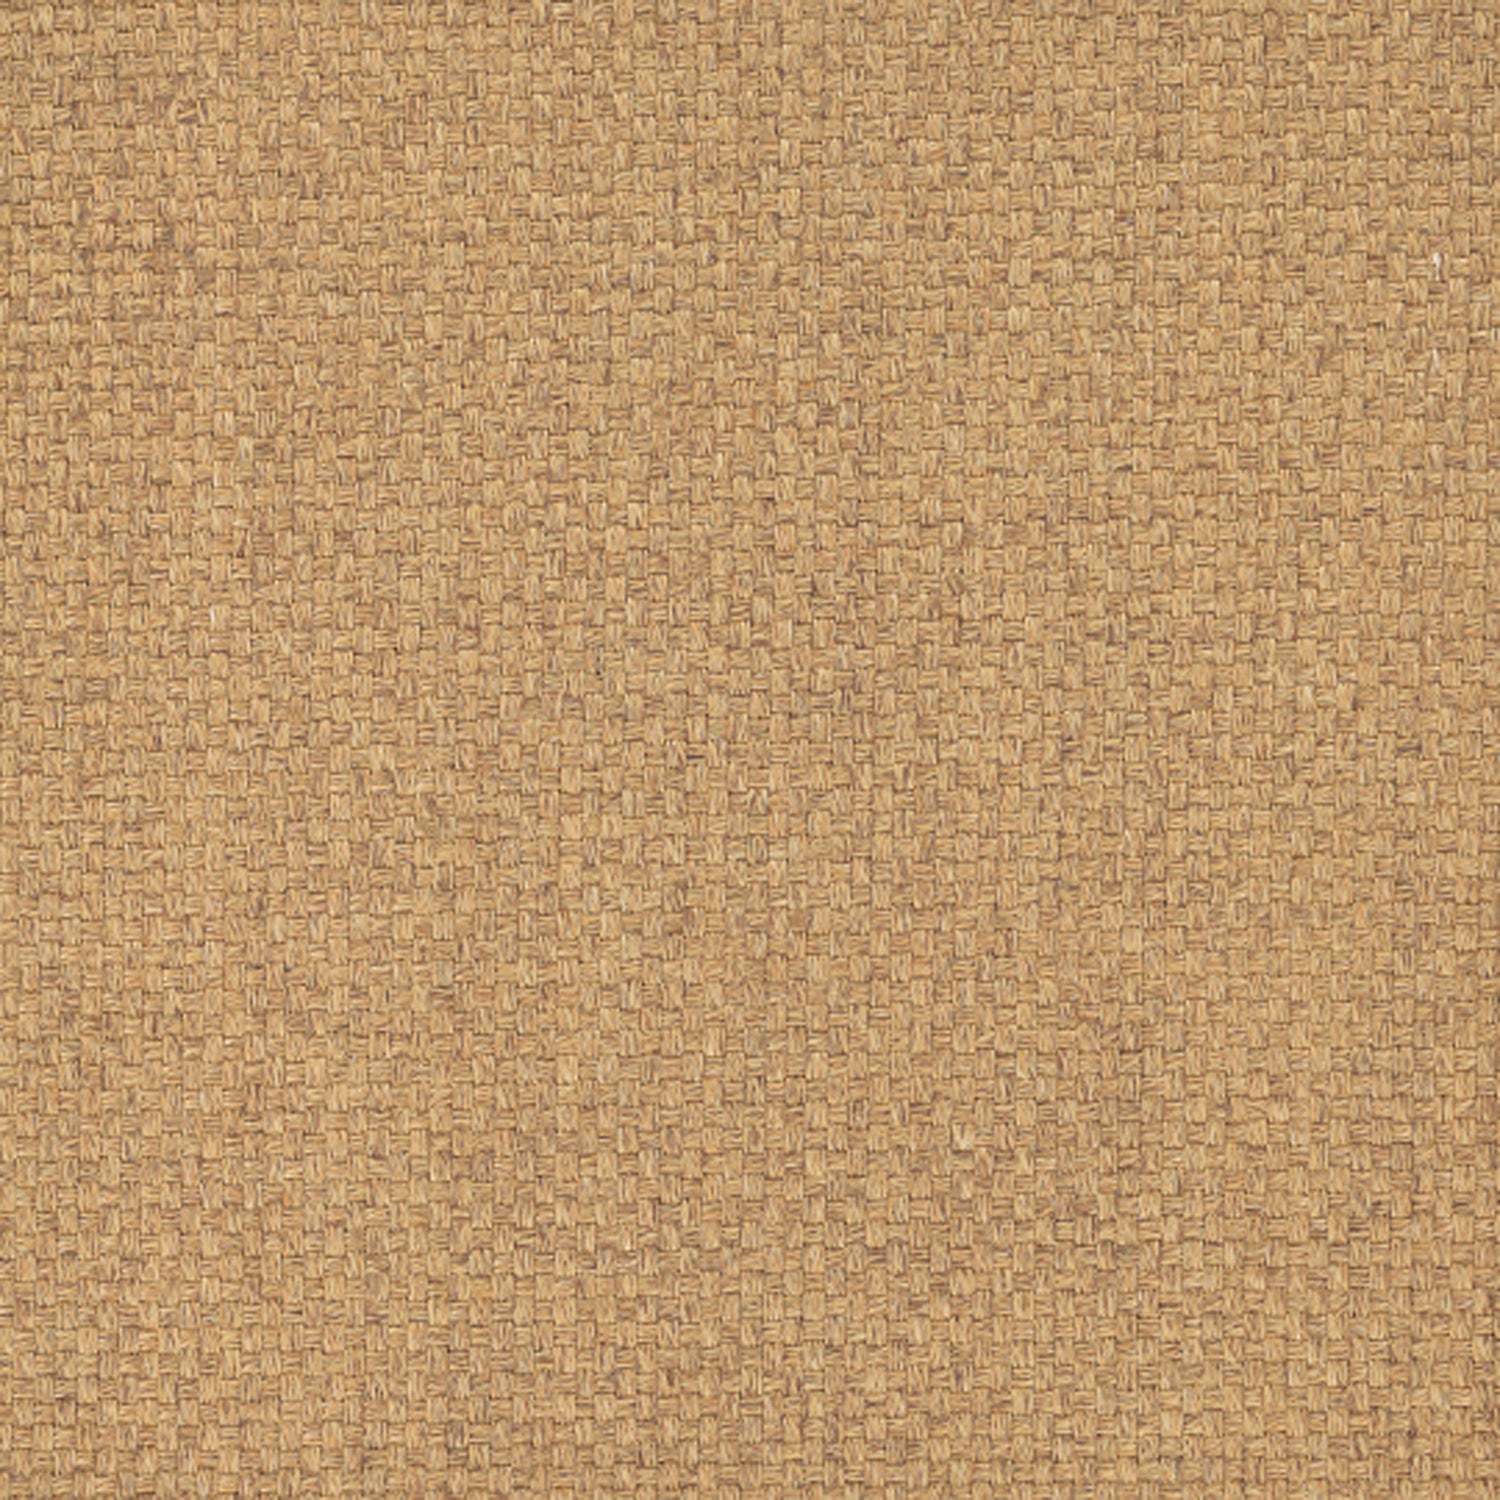 Sisal broadloom carpet swatch in a chunky grid weave in bronze.